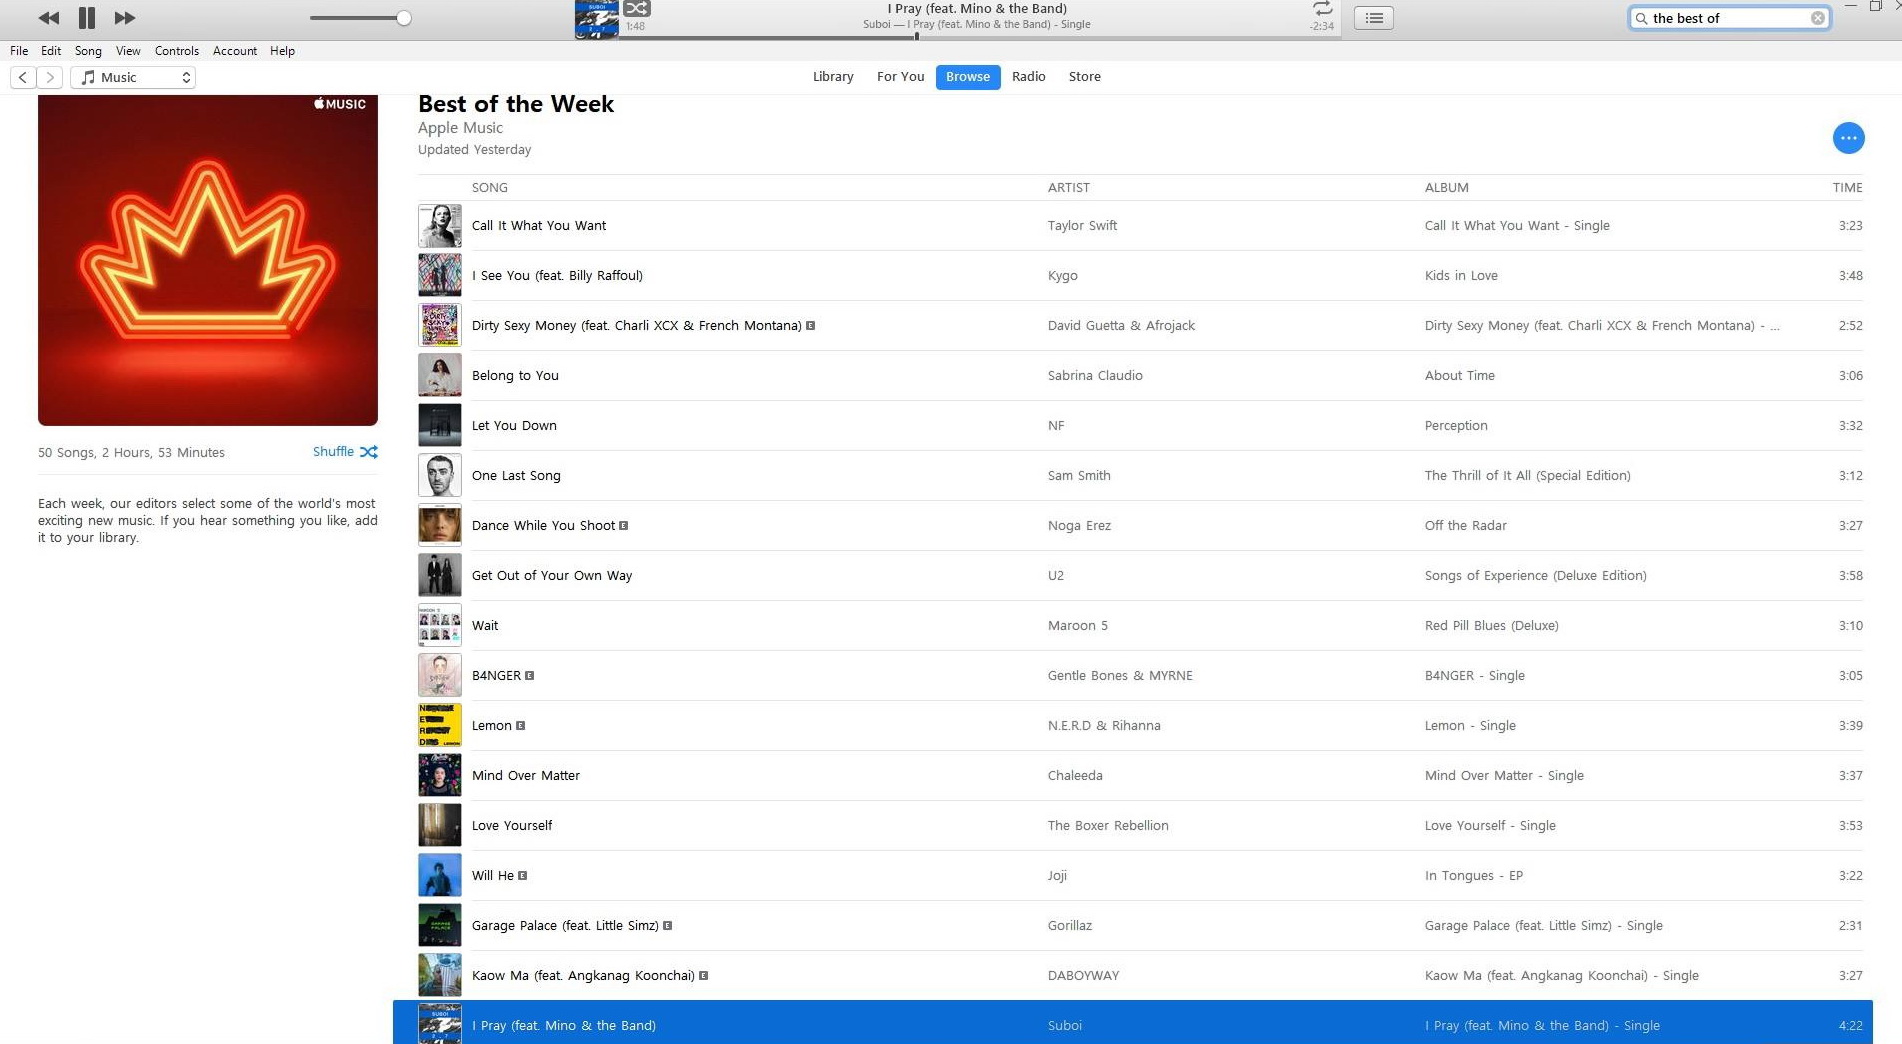 Suboi’s single “I Pray” in Apple Music’s Best of the Week playlist - Screenshot taken on November 6, 2011